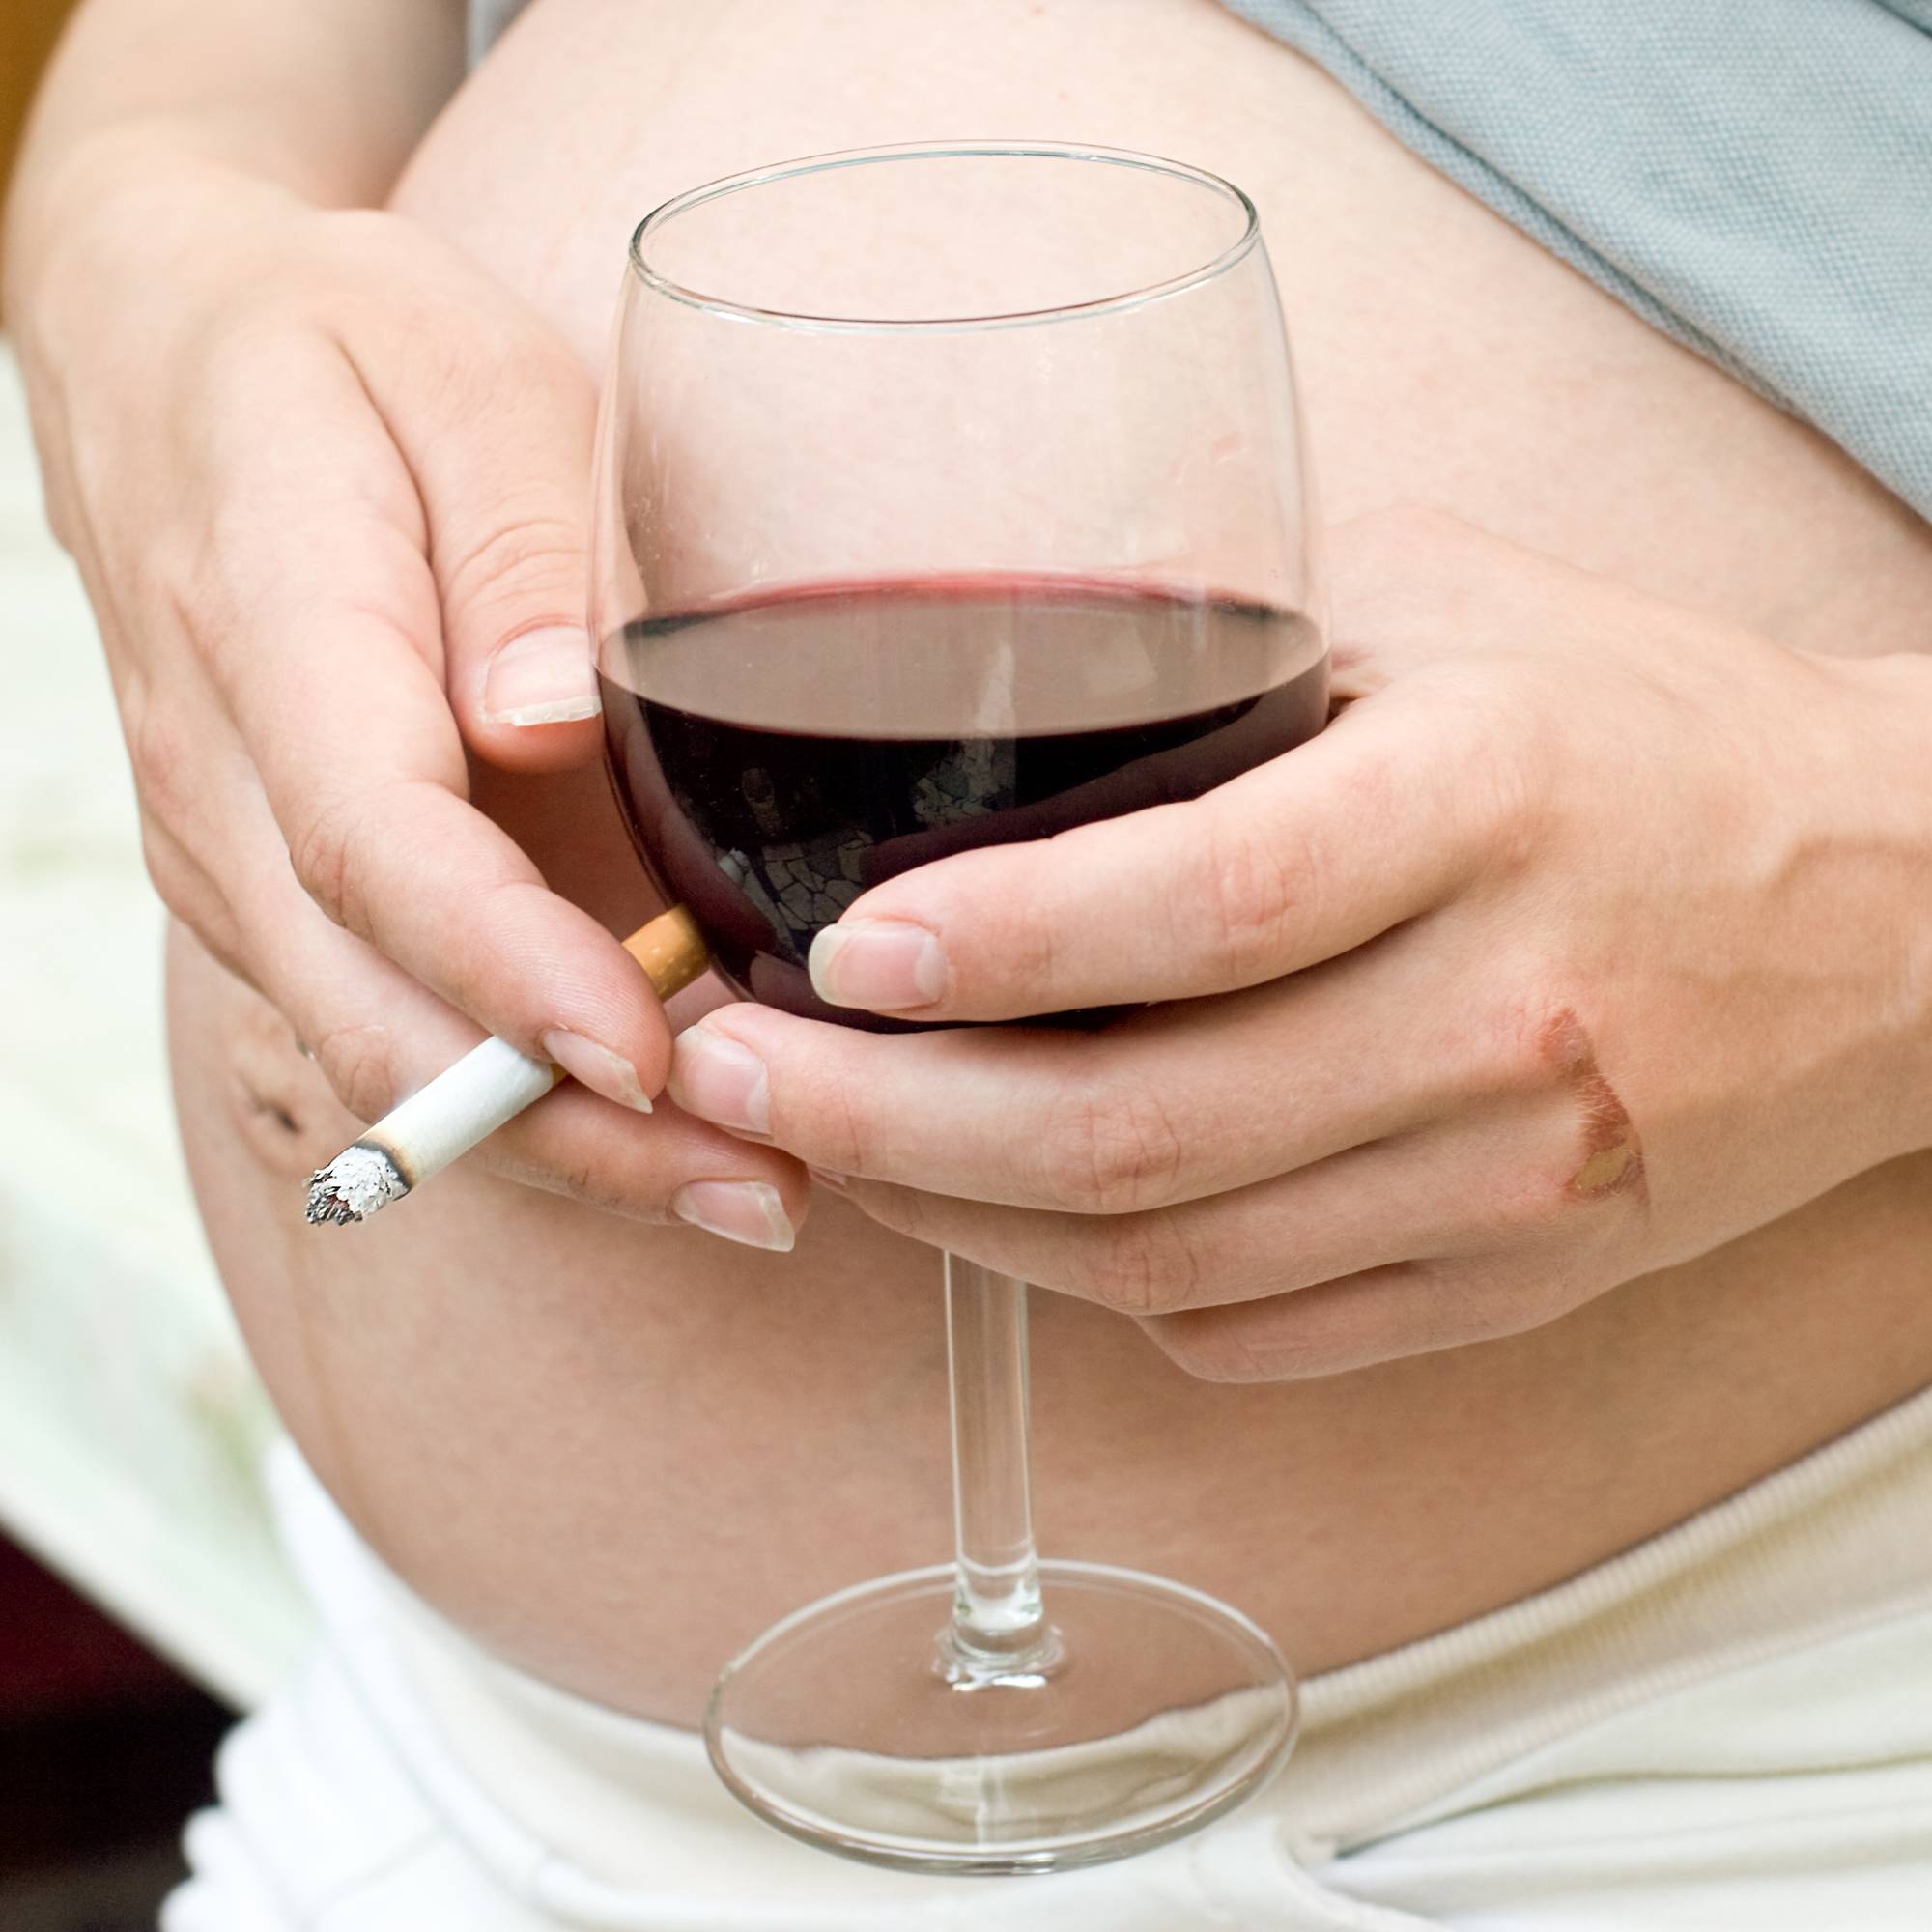 Можно вино при беременности. Беременность и вредные привычки. Вредные привычки беременных. Береенност и вредфне пивыкми.